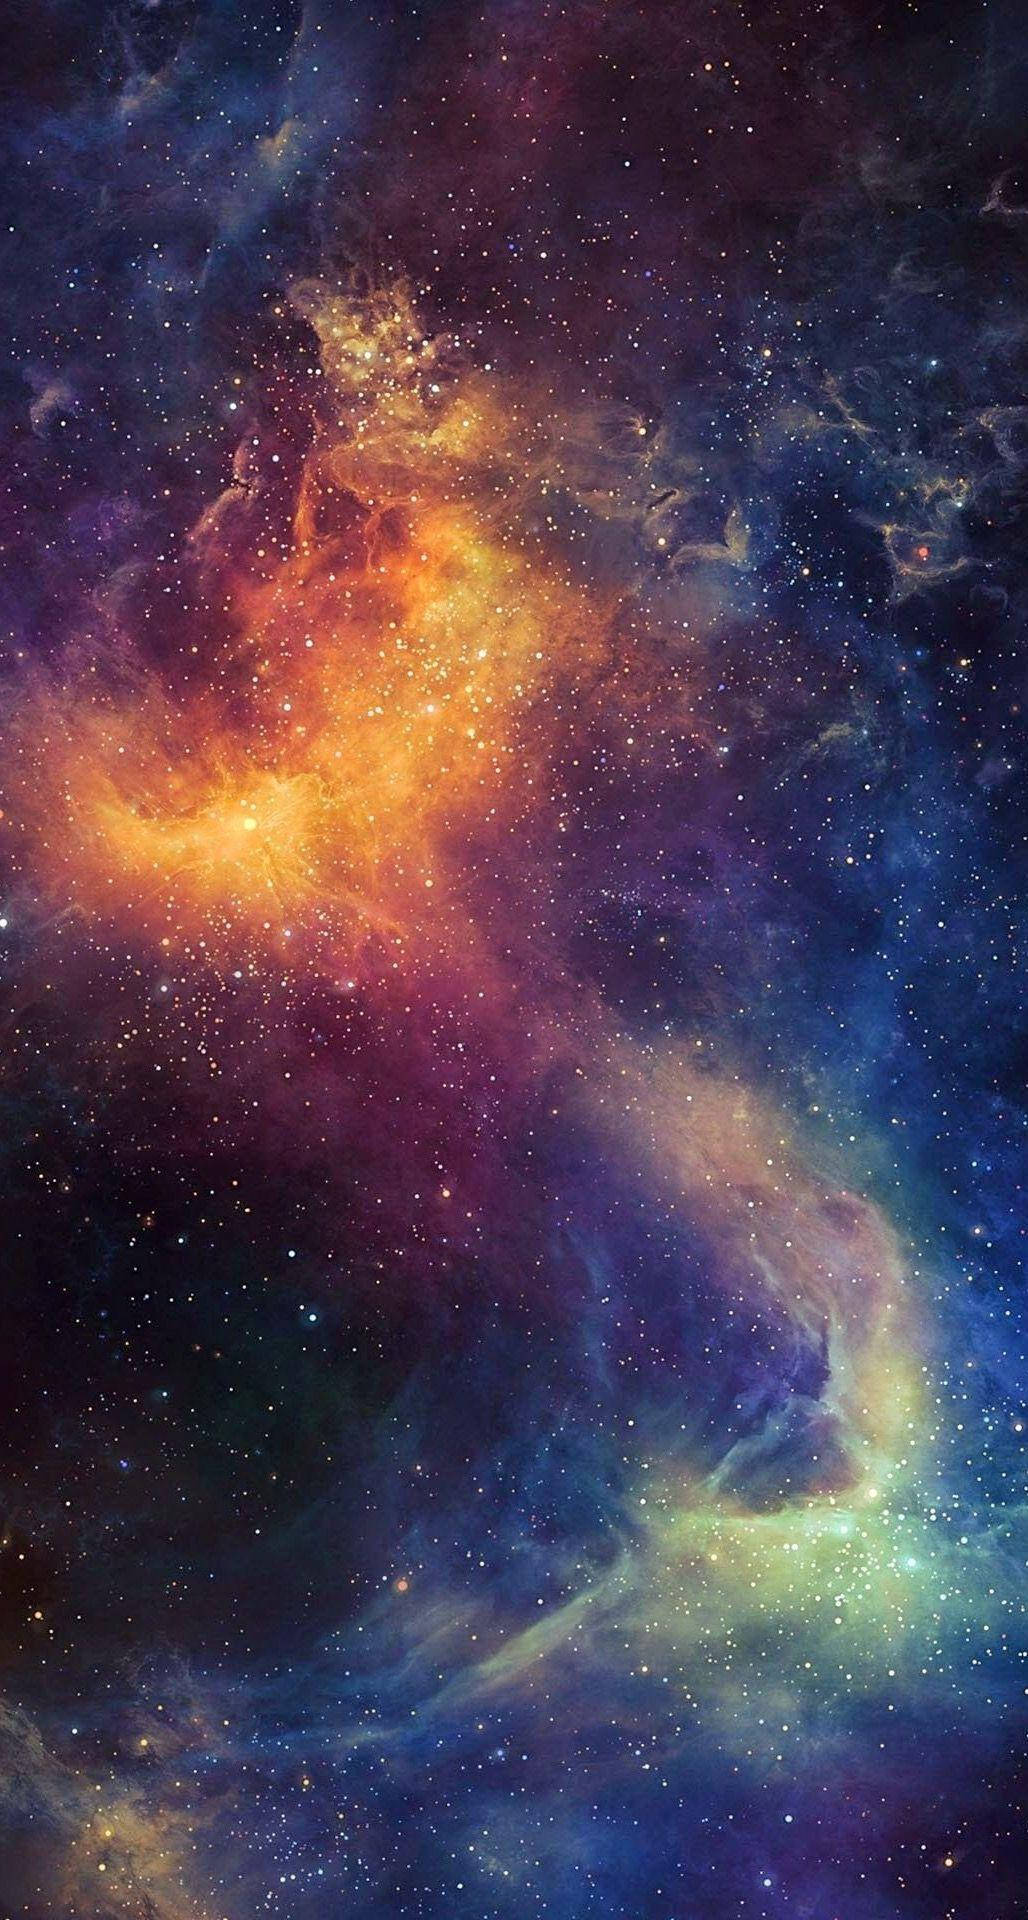 Stunningcolorful Nebula I Rymden Universal: En Fantastiskt Färgglad Nebulosa I Rymden, Universal. Wallpaper